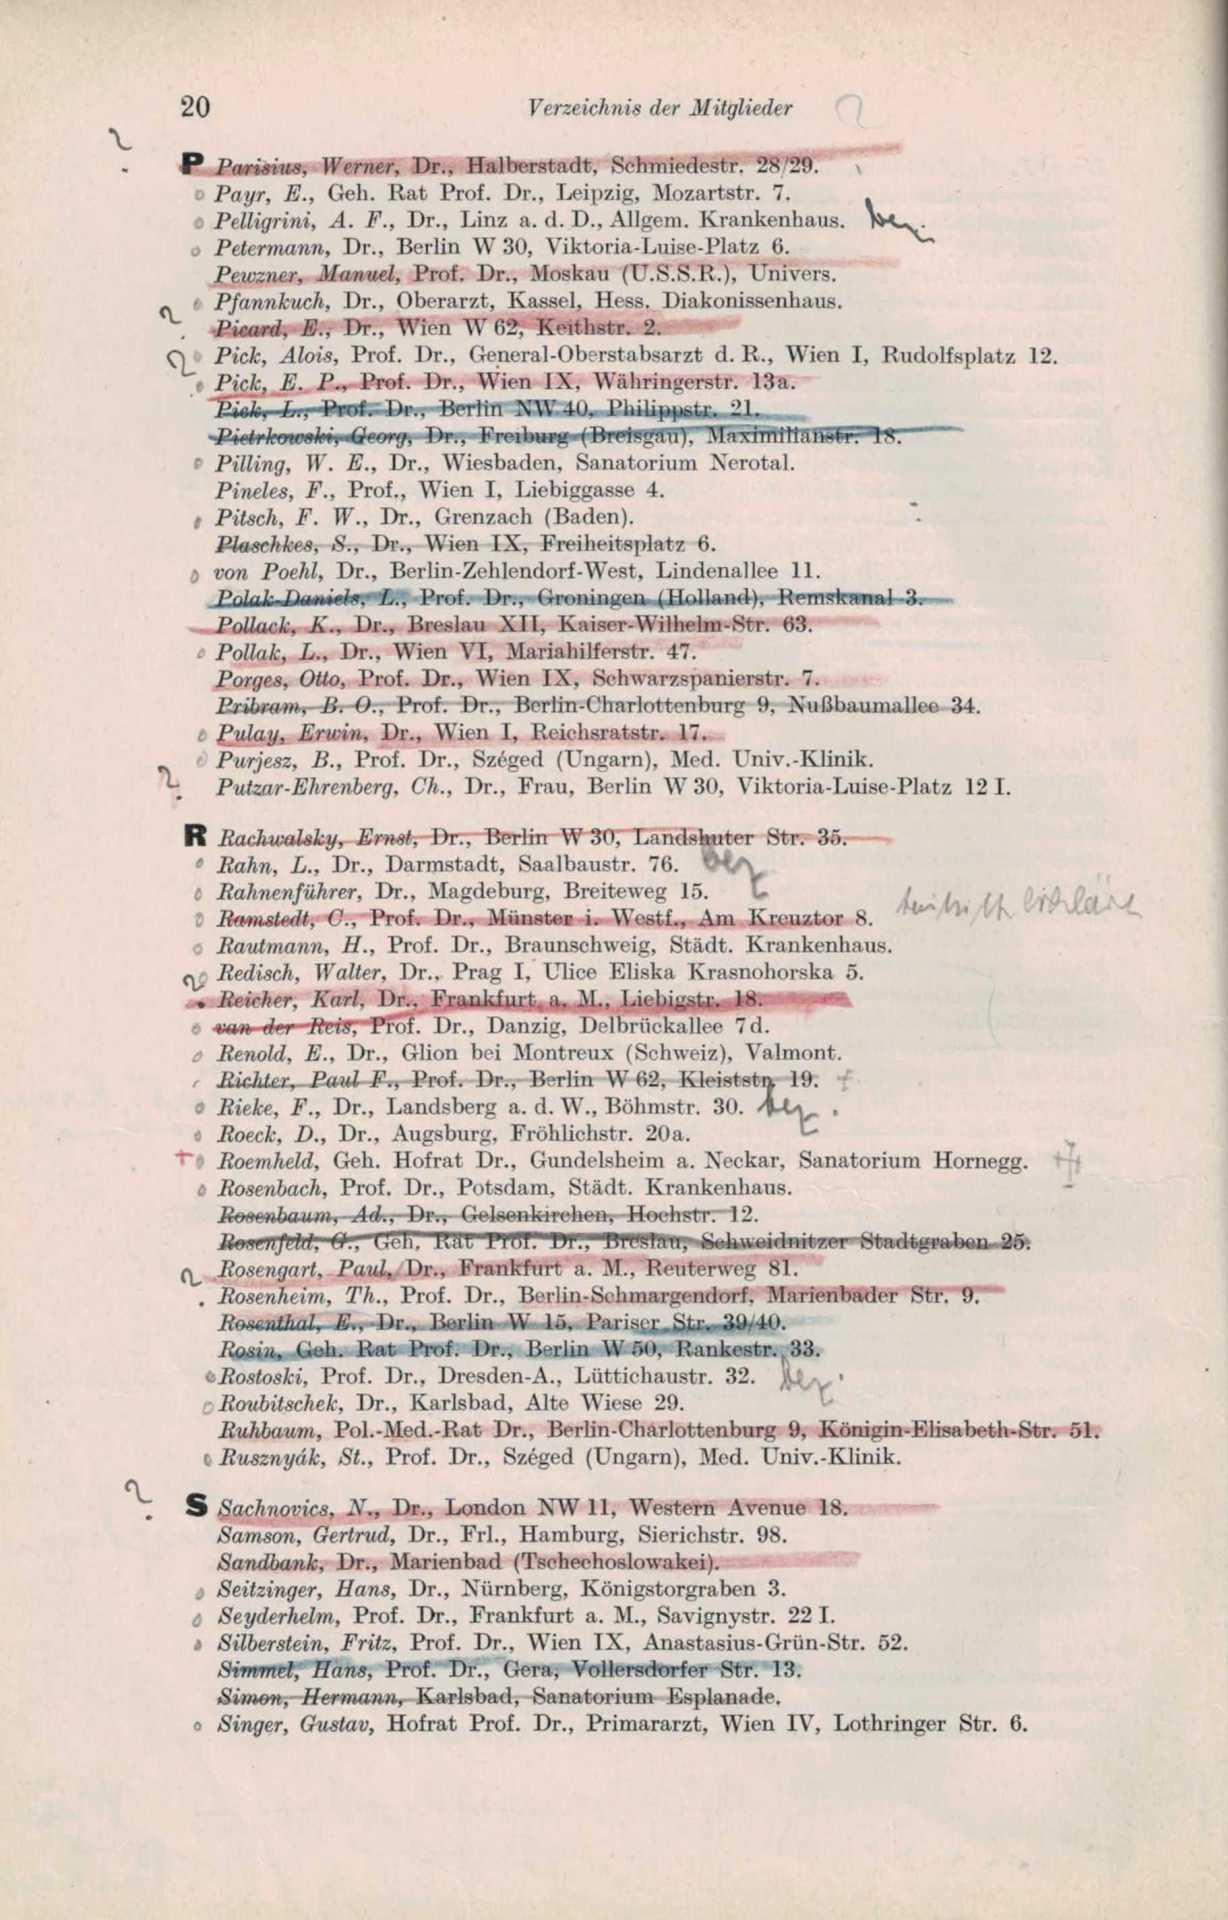 Membership list 1932 6 of 8